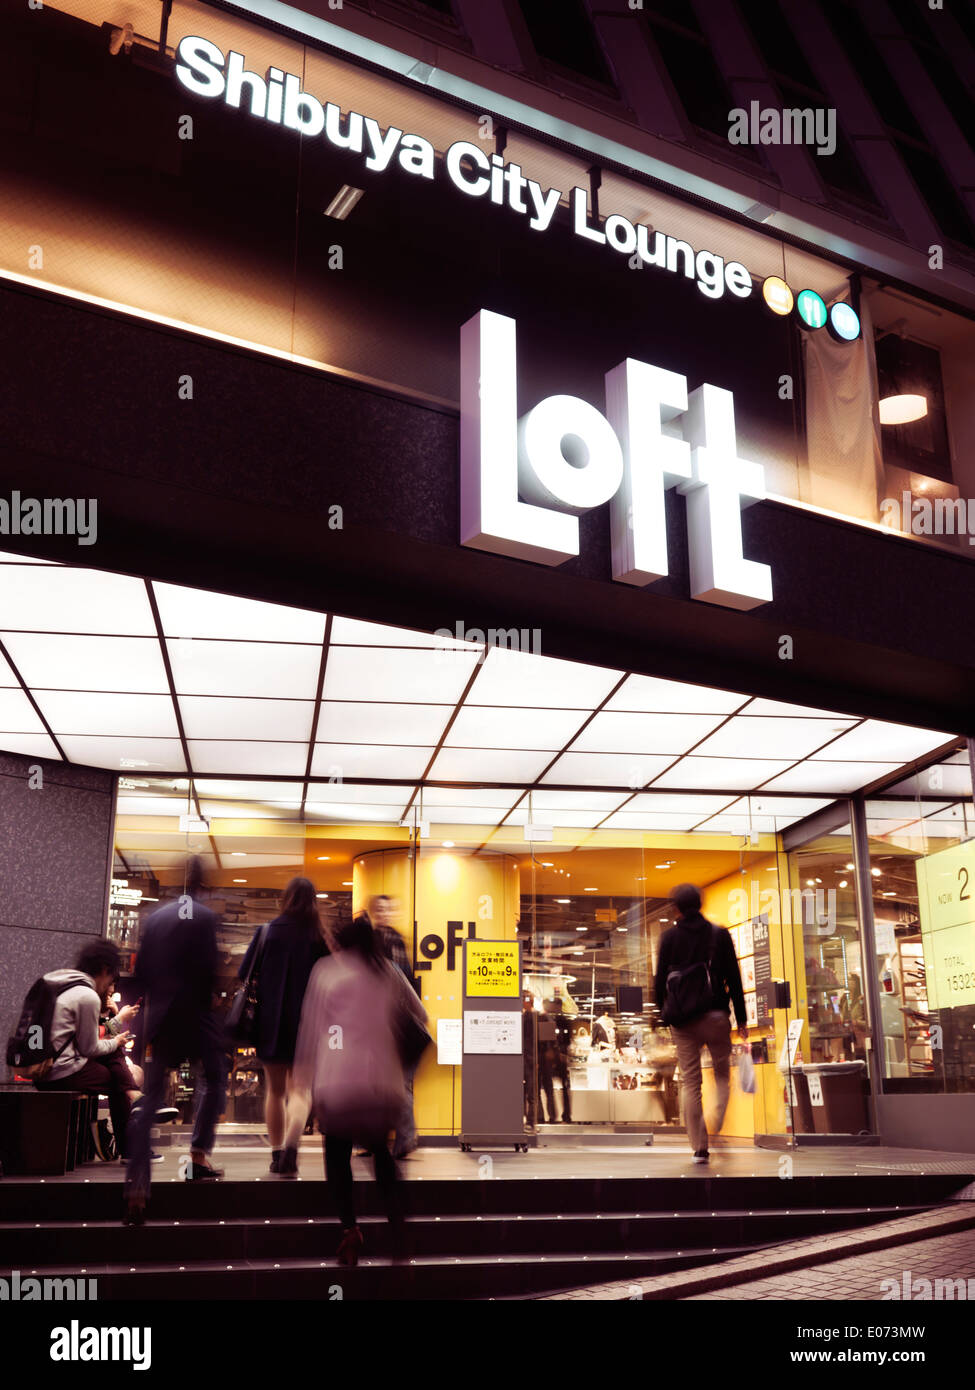 Shibuya City Lounge Loft Store Sign At Night In Tokyo Japan Stock Photo Alamy